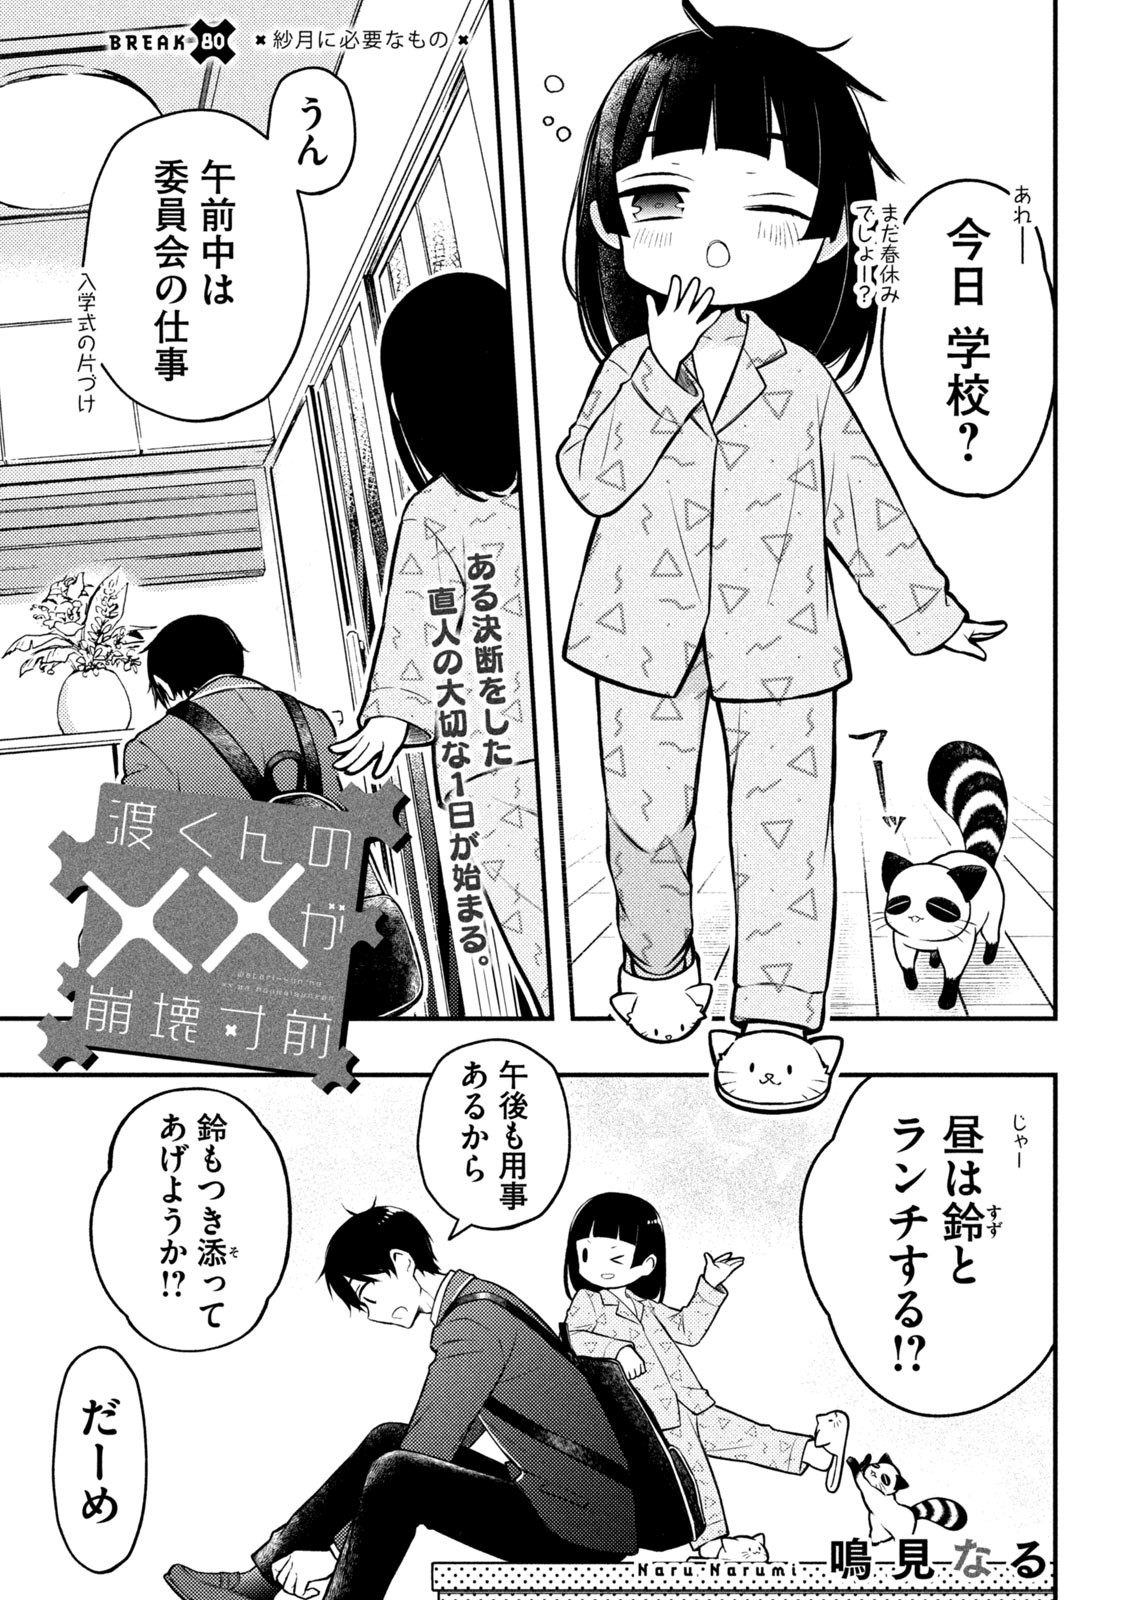 Watari-kun no xx ga Houkai Sunzen - Chapter 80 - Page 1